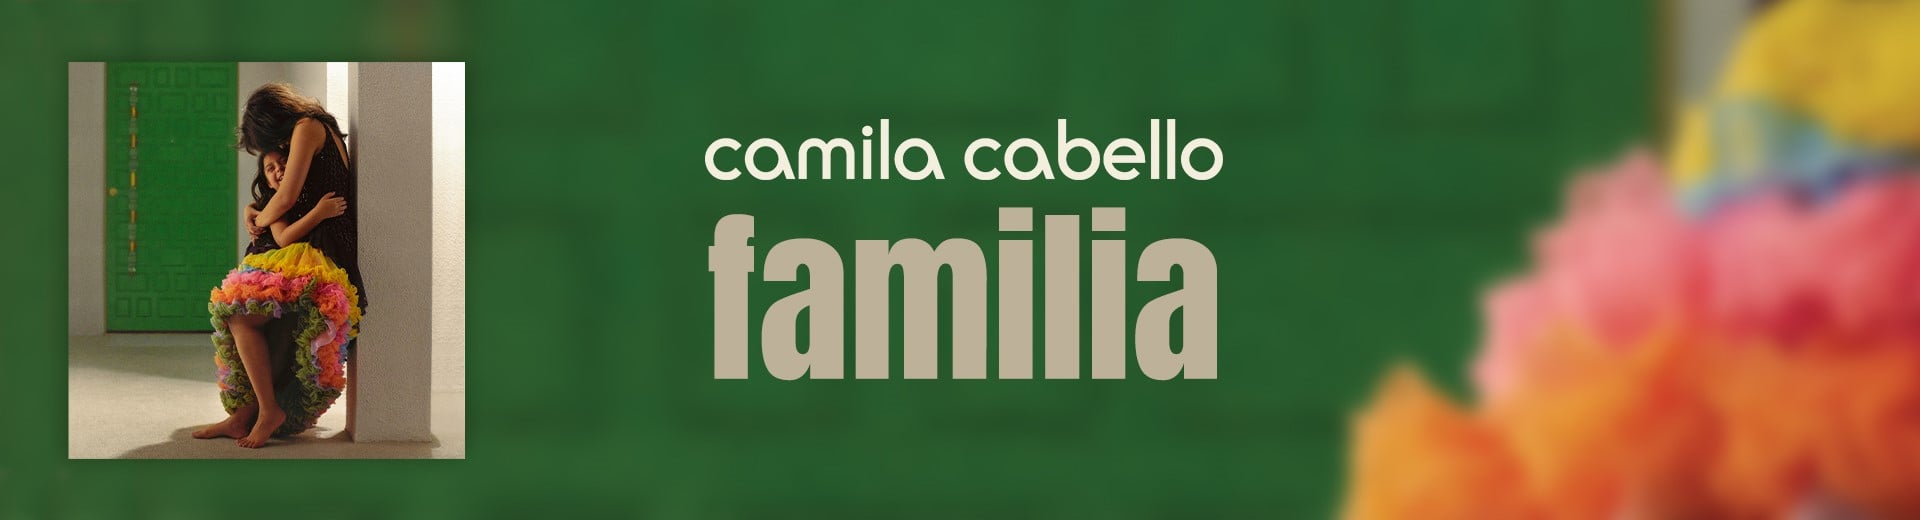 1920x520-202203-sony-camilacabello-slide